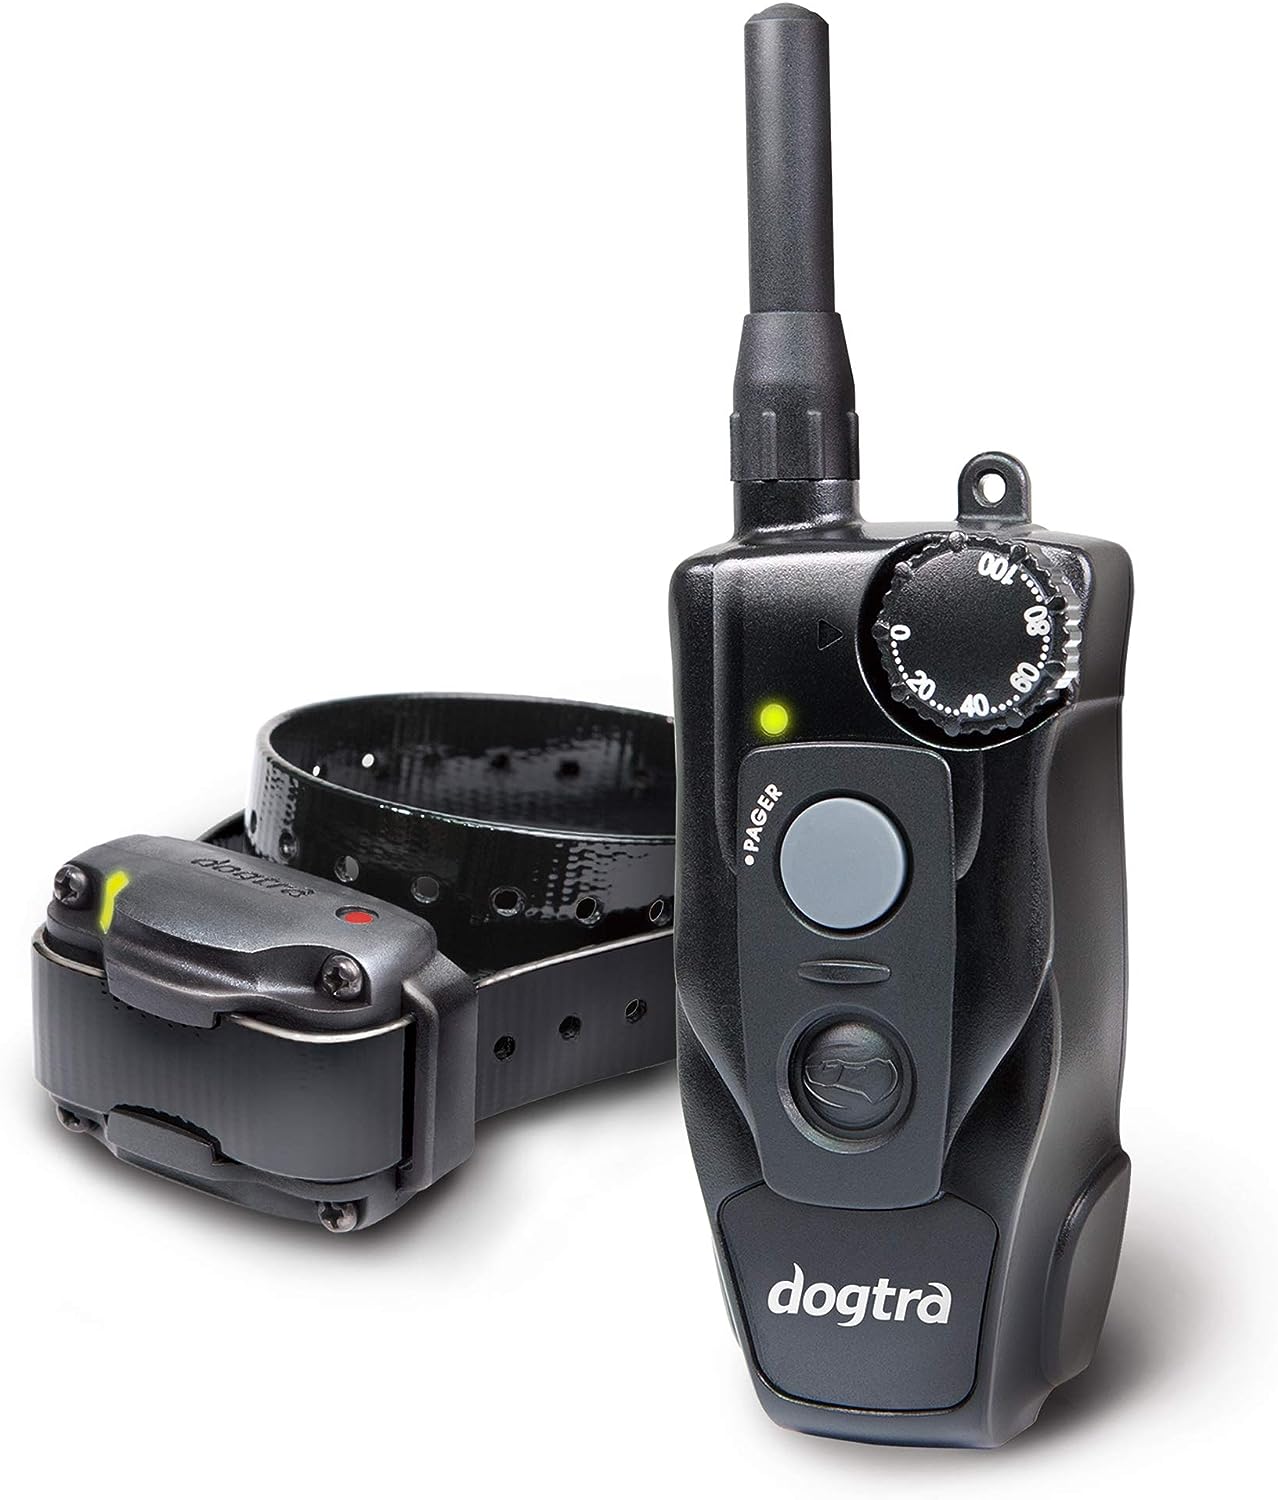 Dogtra 200C Remote Training E-Collar Review